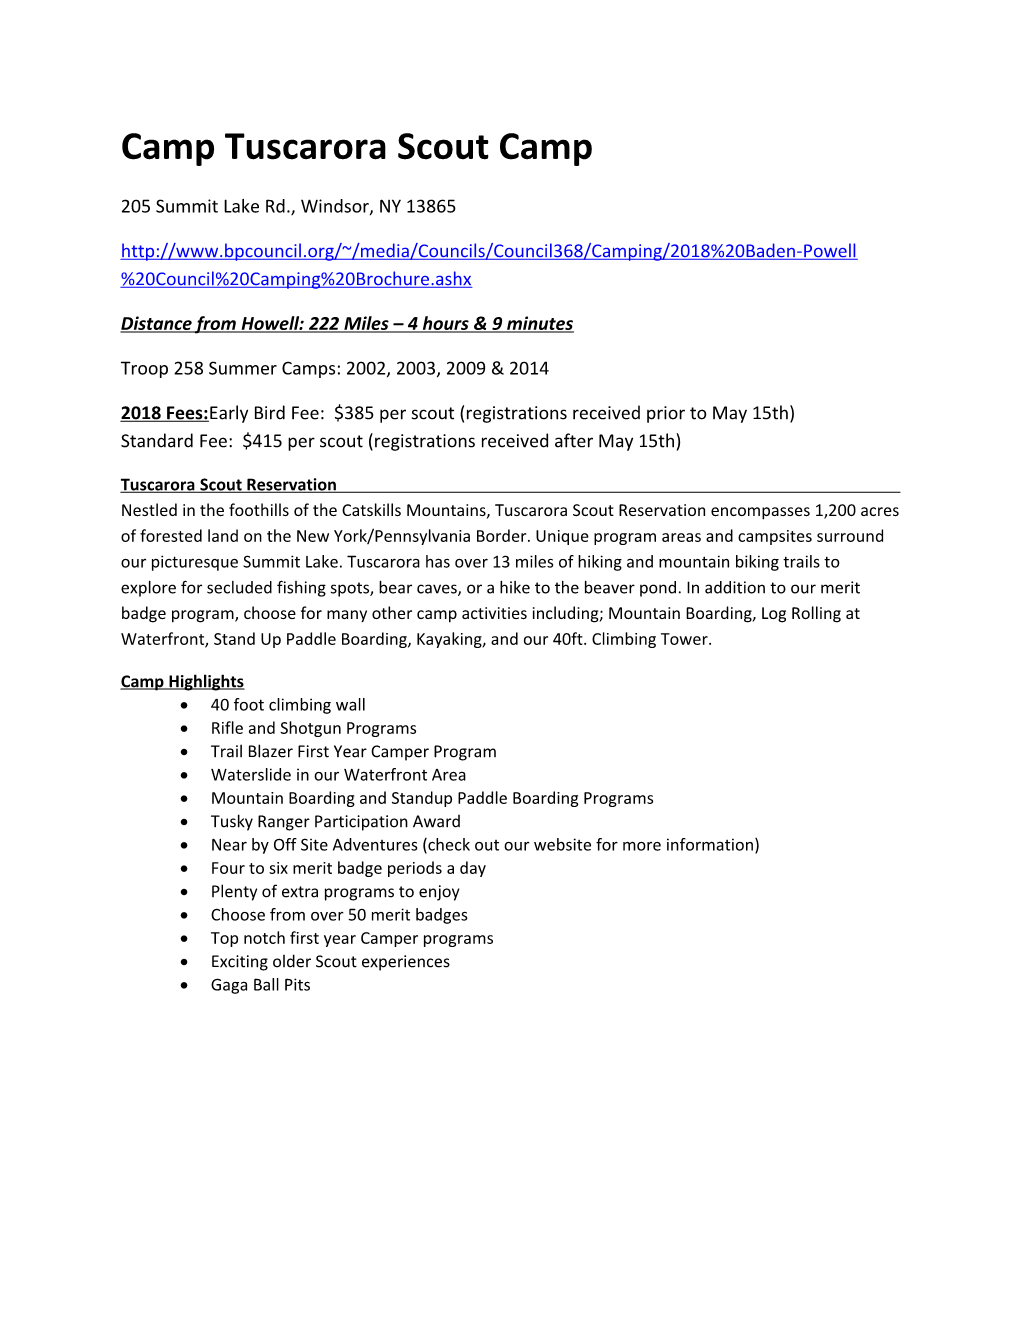 Camp Tuscarora Scout Camp